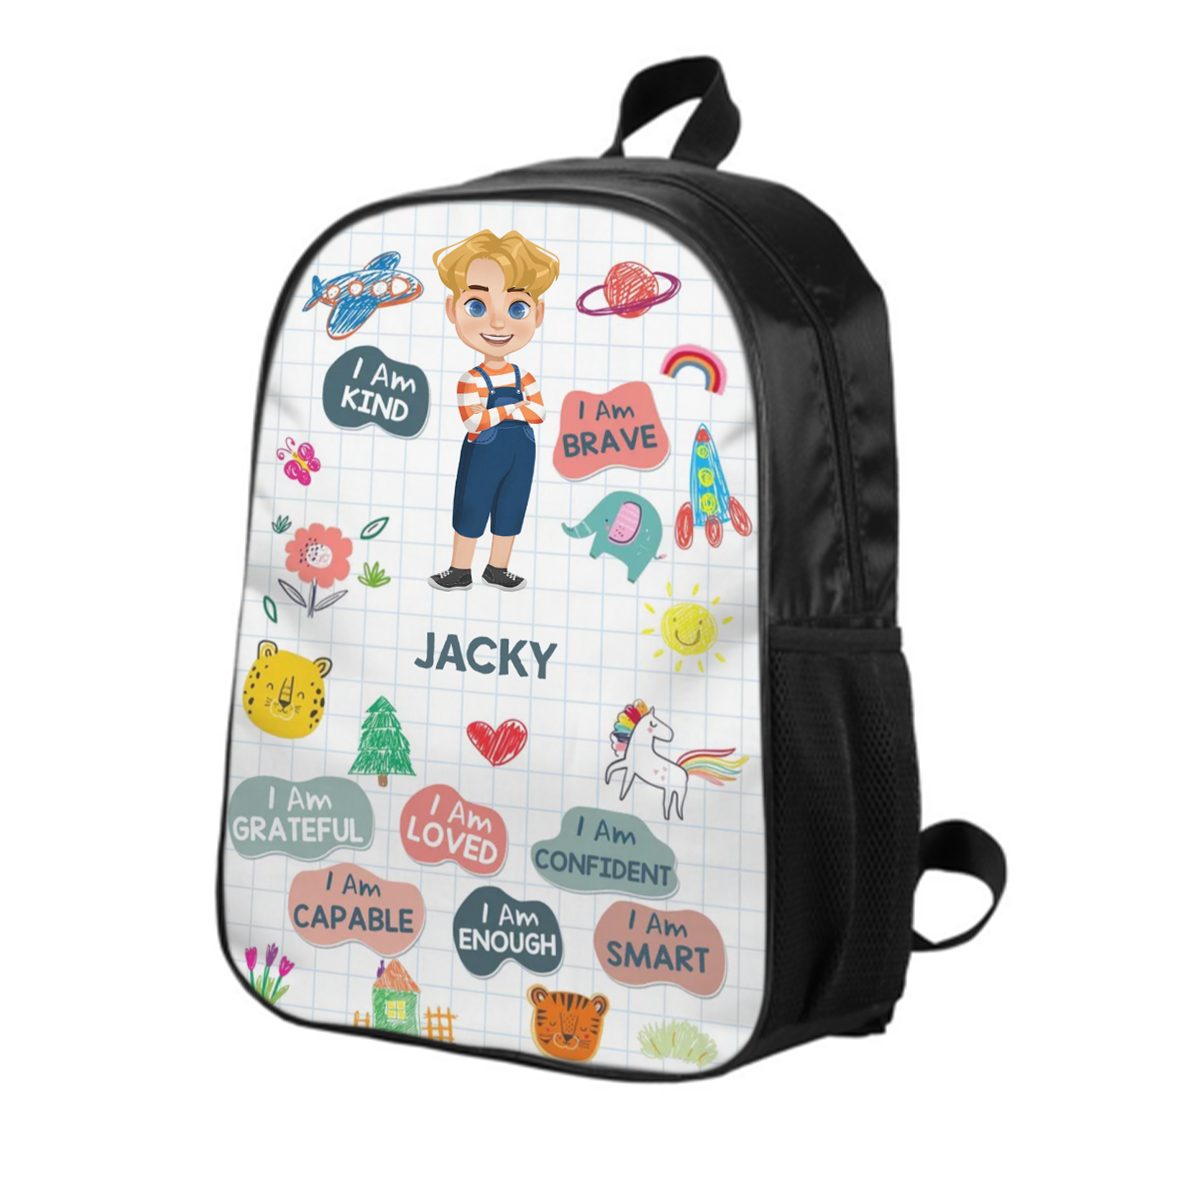 I Am Kind Smart Brave Affirmations - Gift For Kids, Back To School - Personalized Backpack